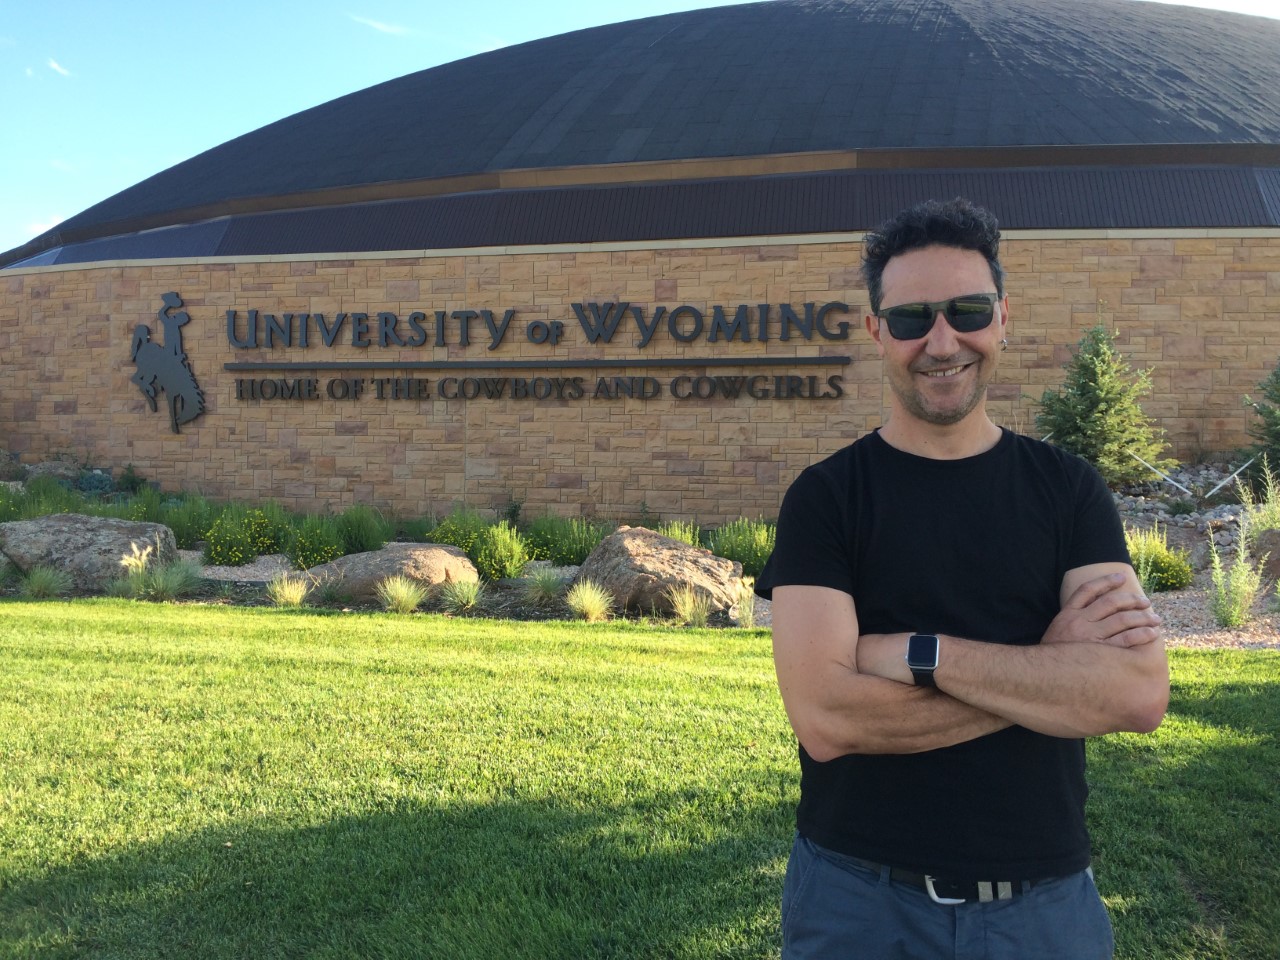 Dr Arvanitakis at the University of Wyoming campus